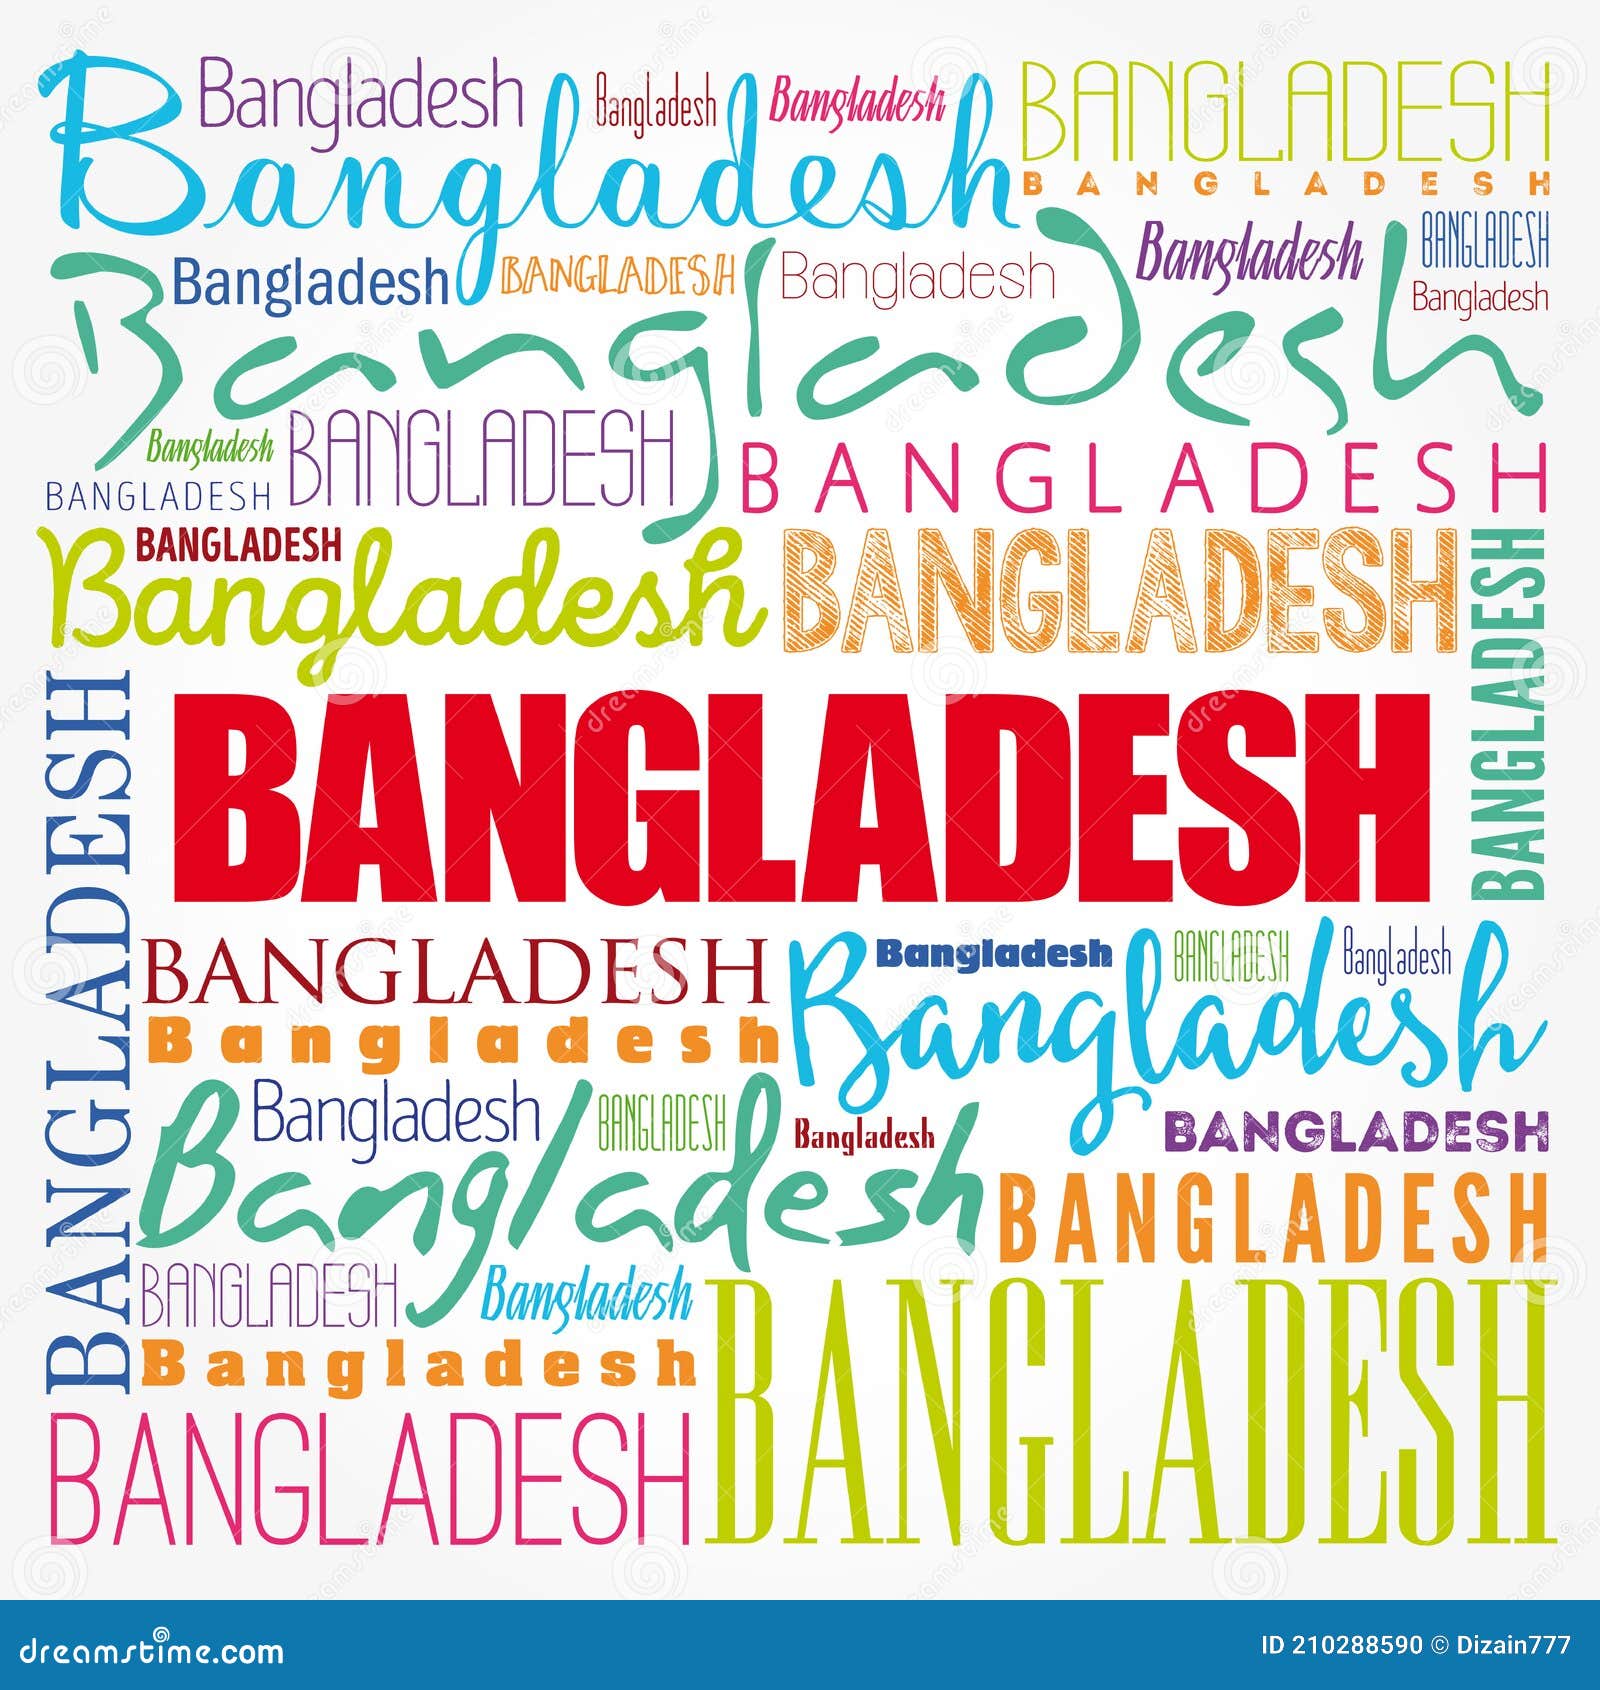 Bangladesh Flag Facebook Cover Image, Photo, Wallpaper | BANGLADESH